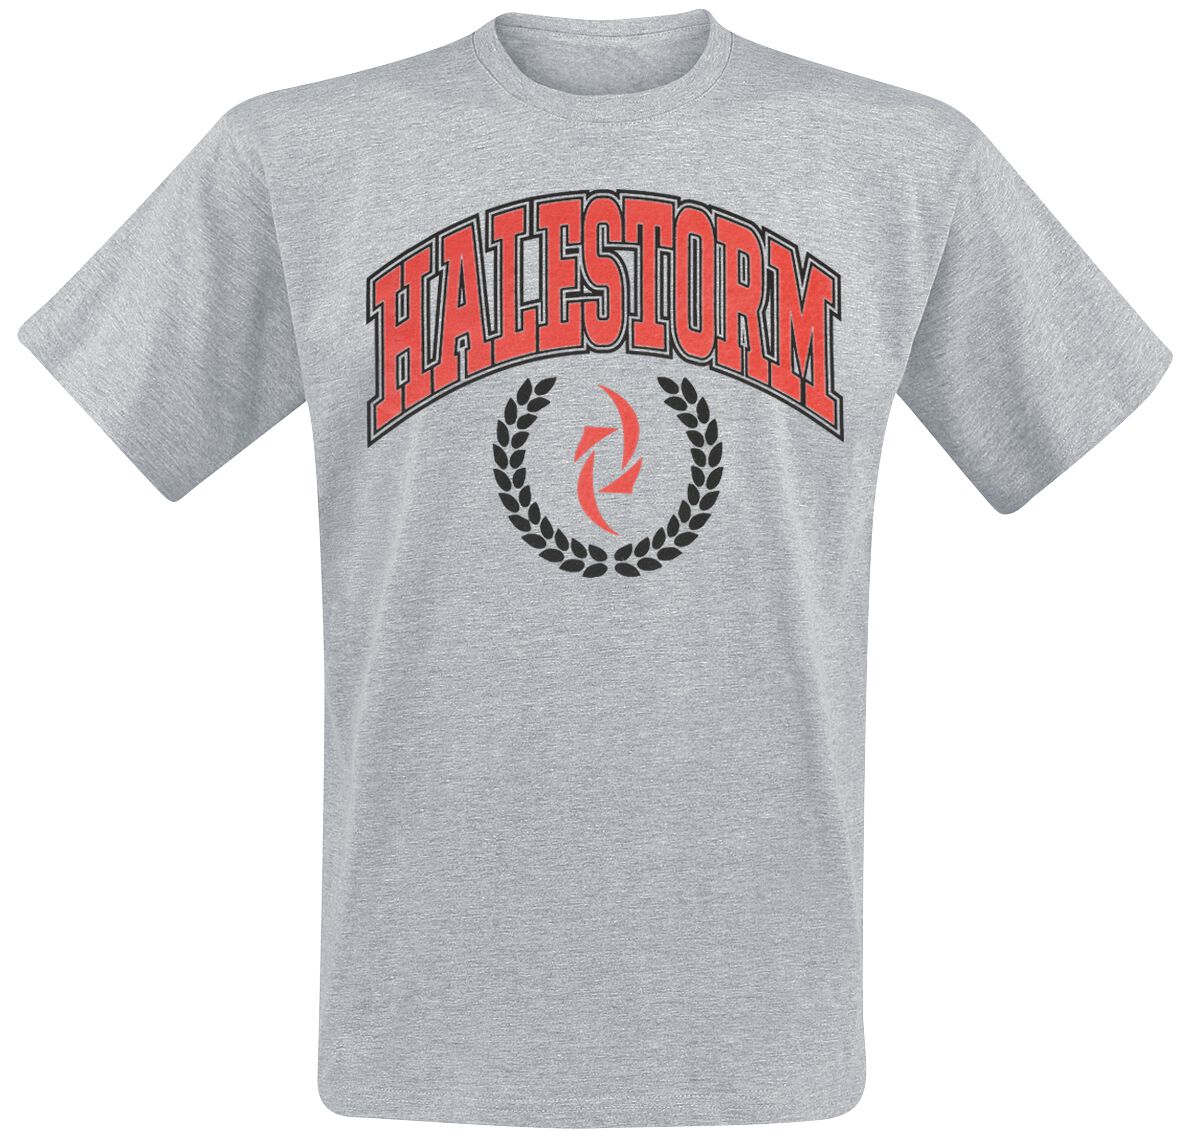 Halestorm Varsity Logo T-Shirt grau meliert in S